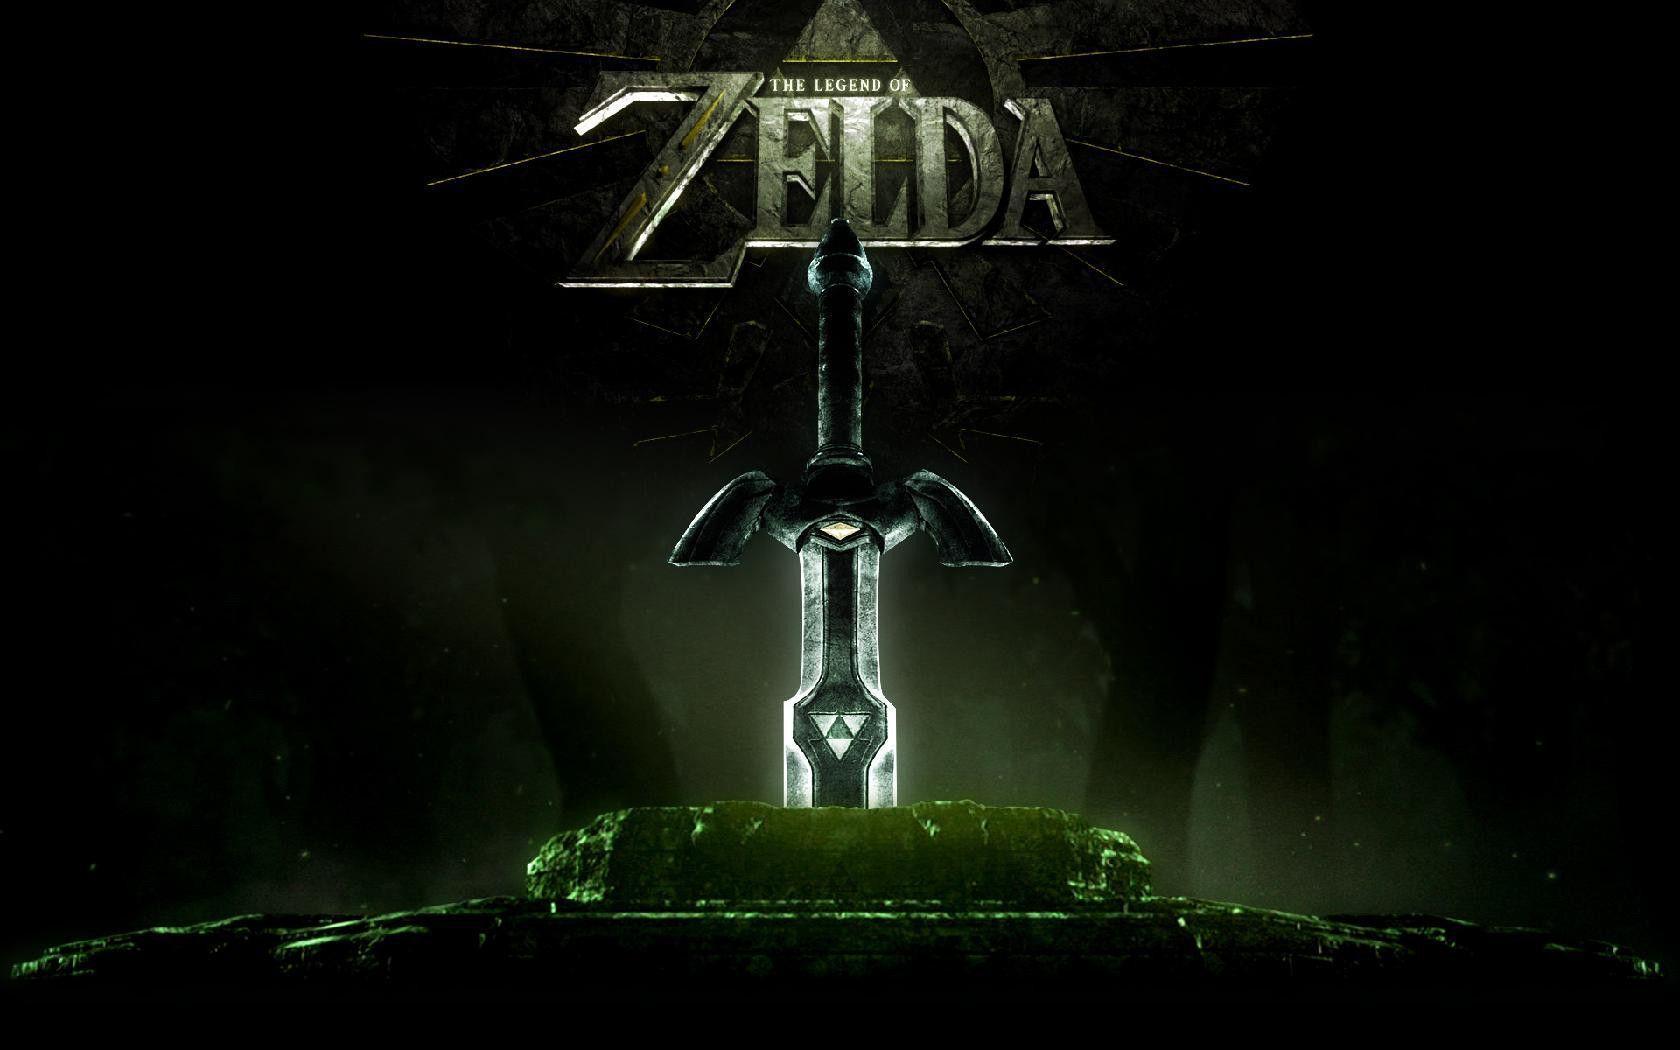 Wallpaper da semana: The Legend of Zelda